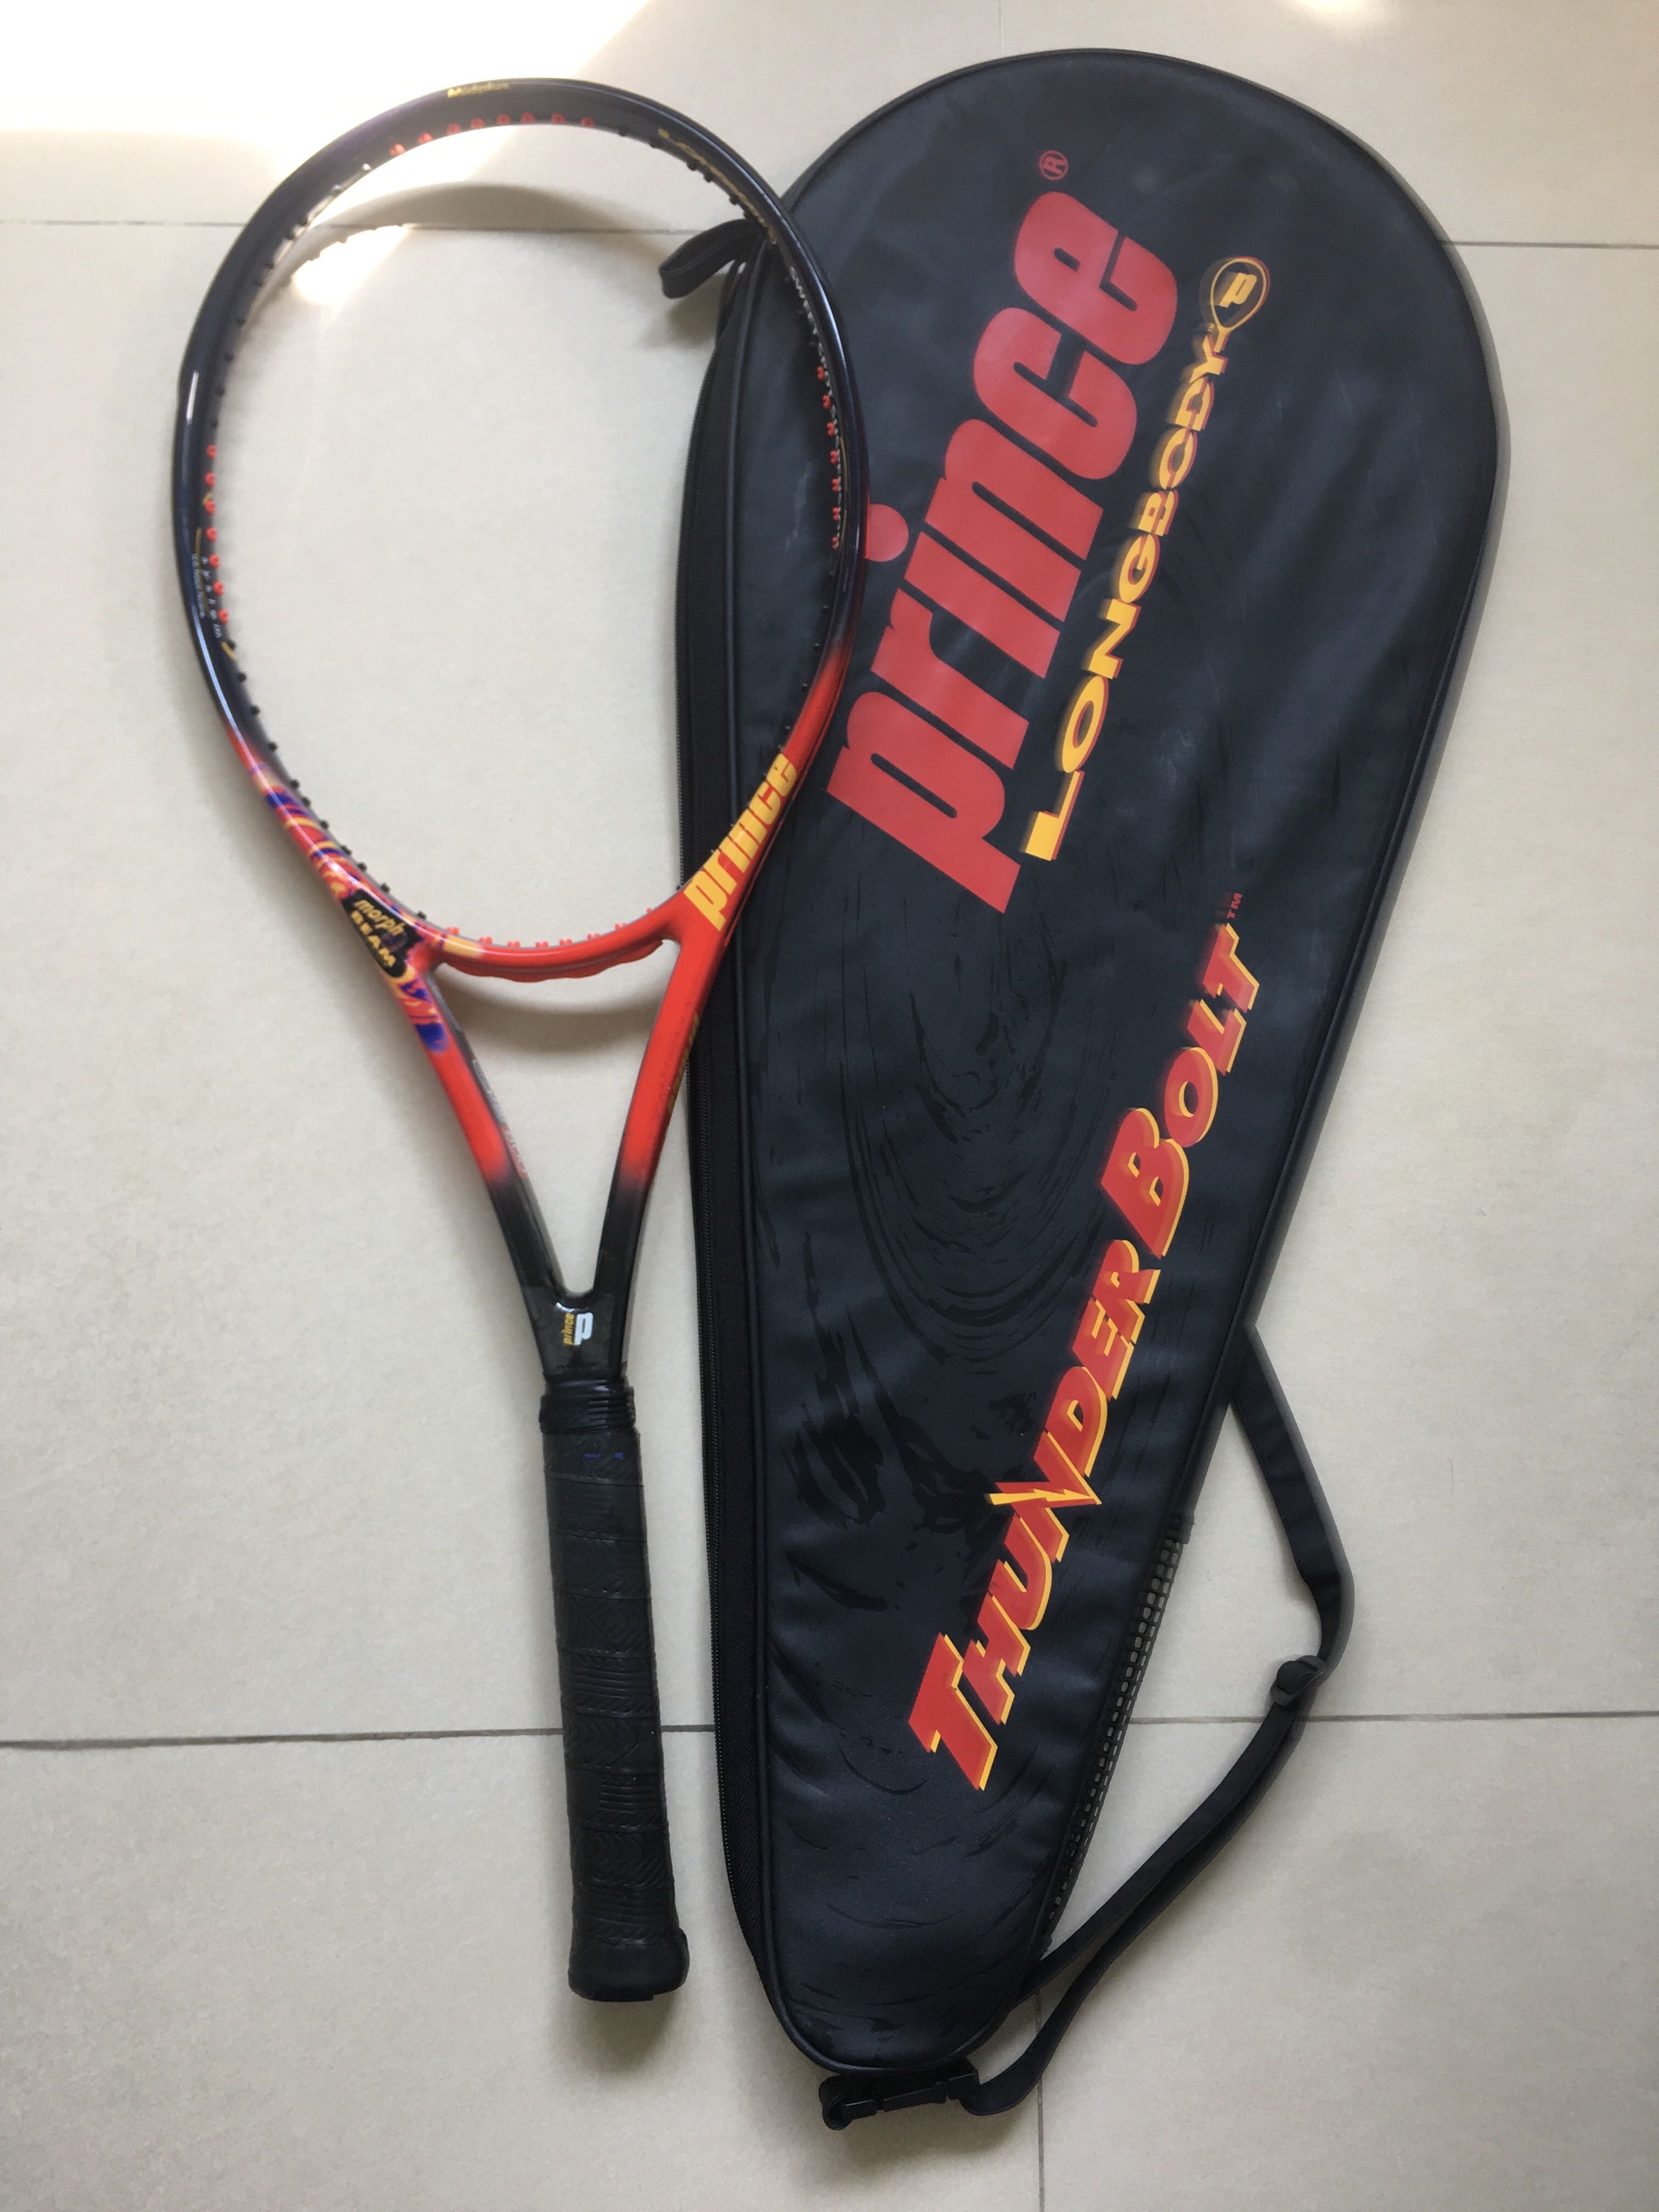 NEW Prince Thunderbolt Longbody 100 head 28.5 4 1/4 grip 800power Tennis Racquet 